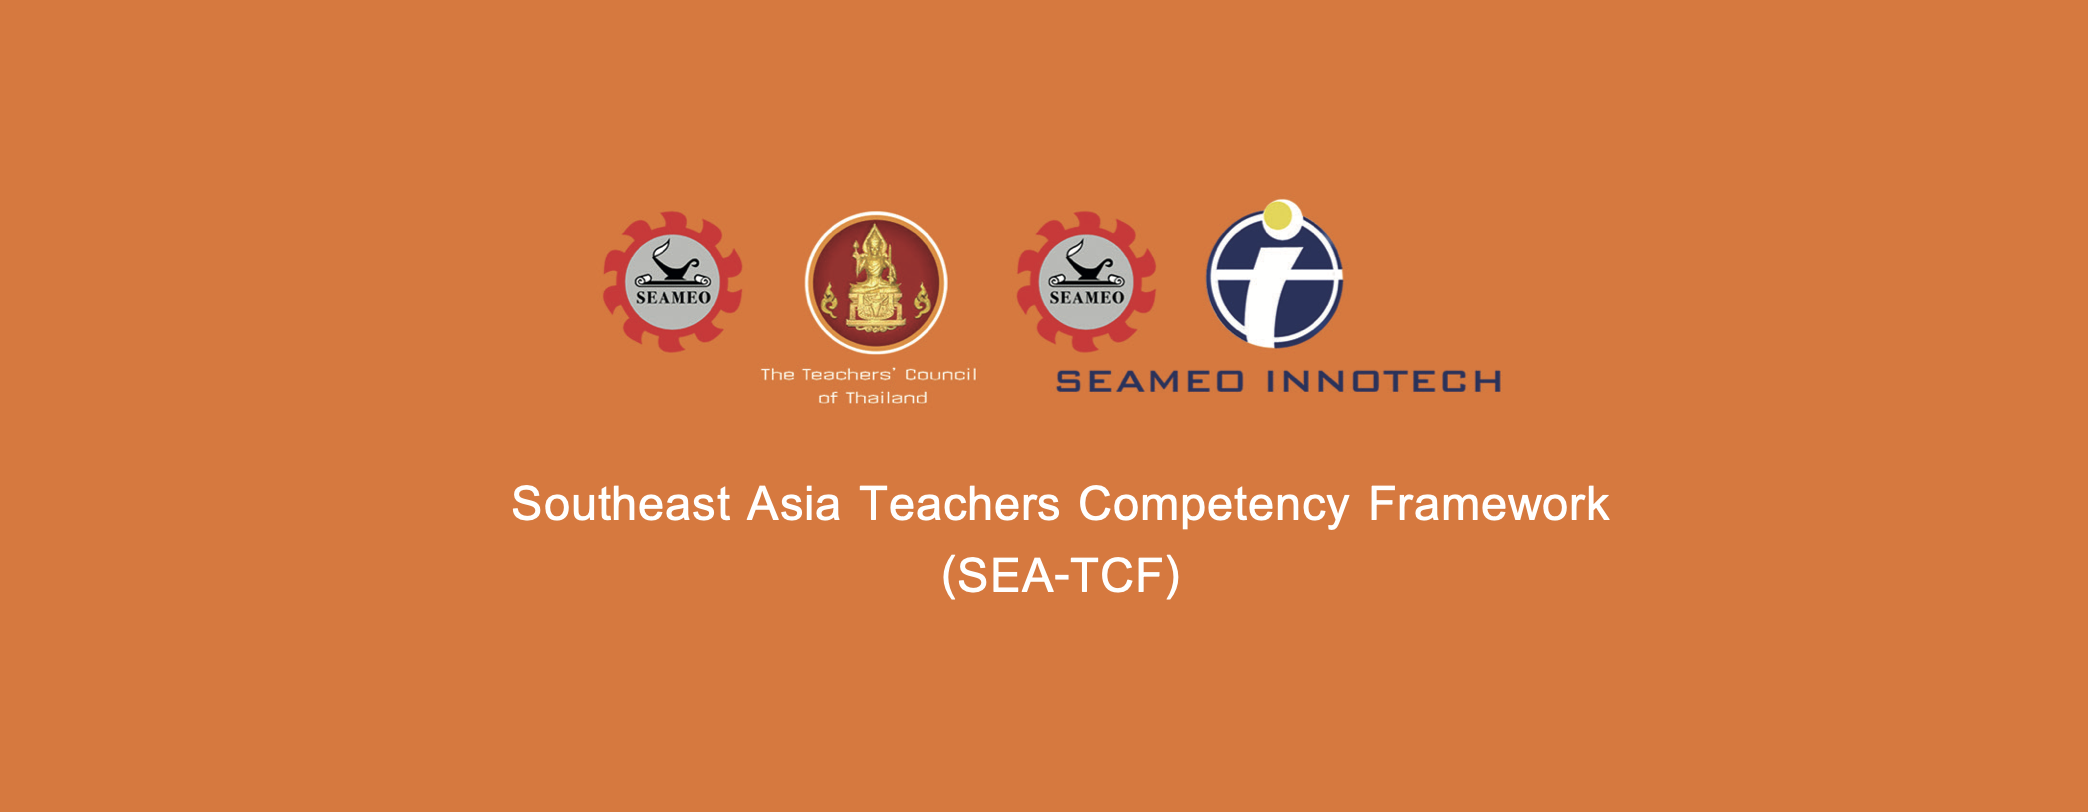 A teaching framework for the Southeast Asian region. Southeast Asia Teachers Competency Framework